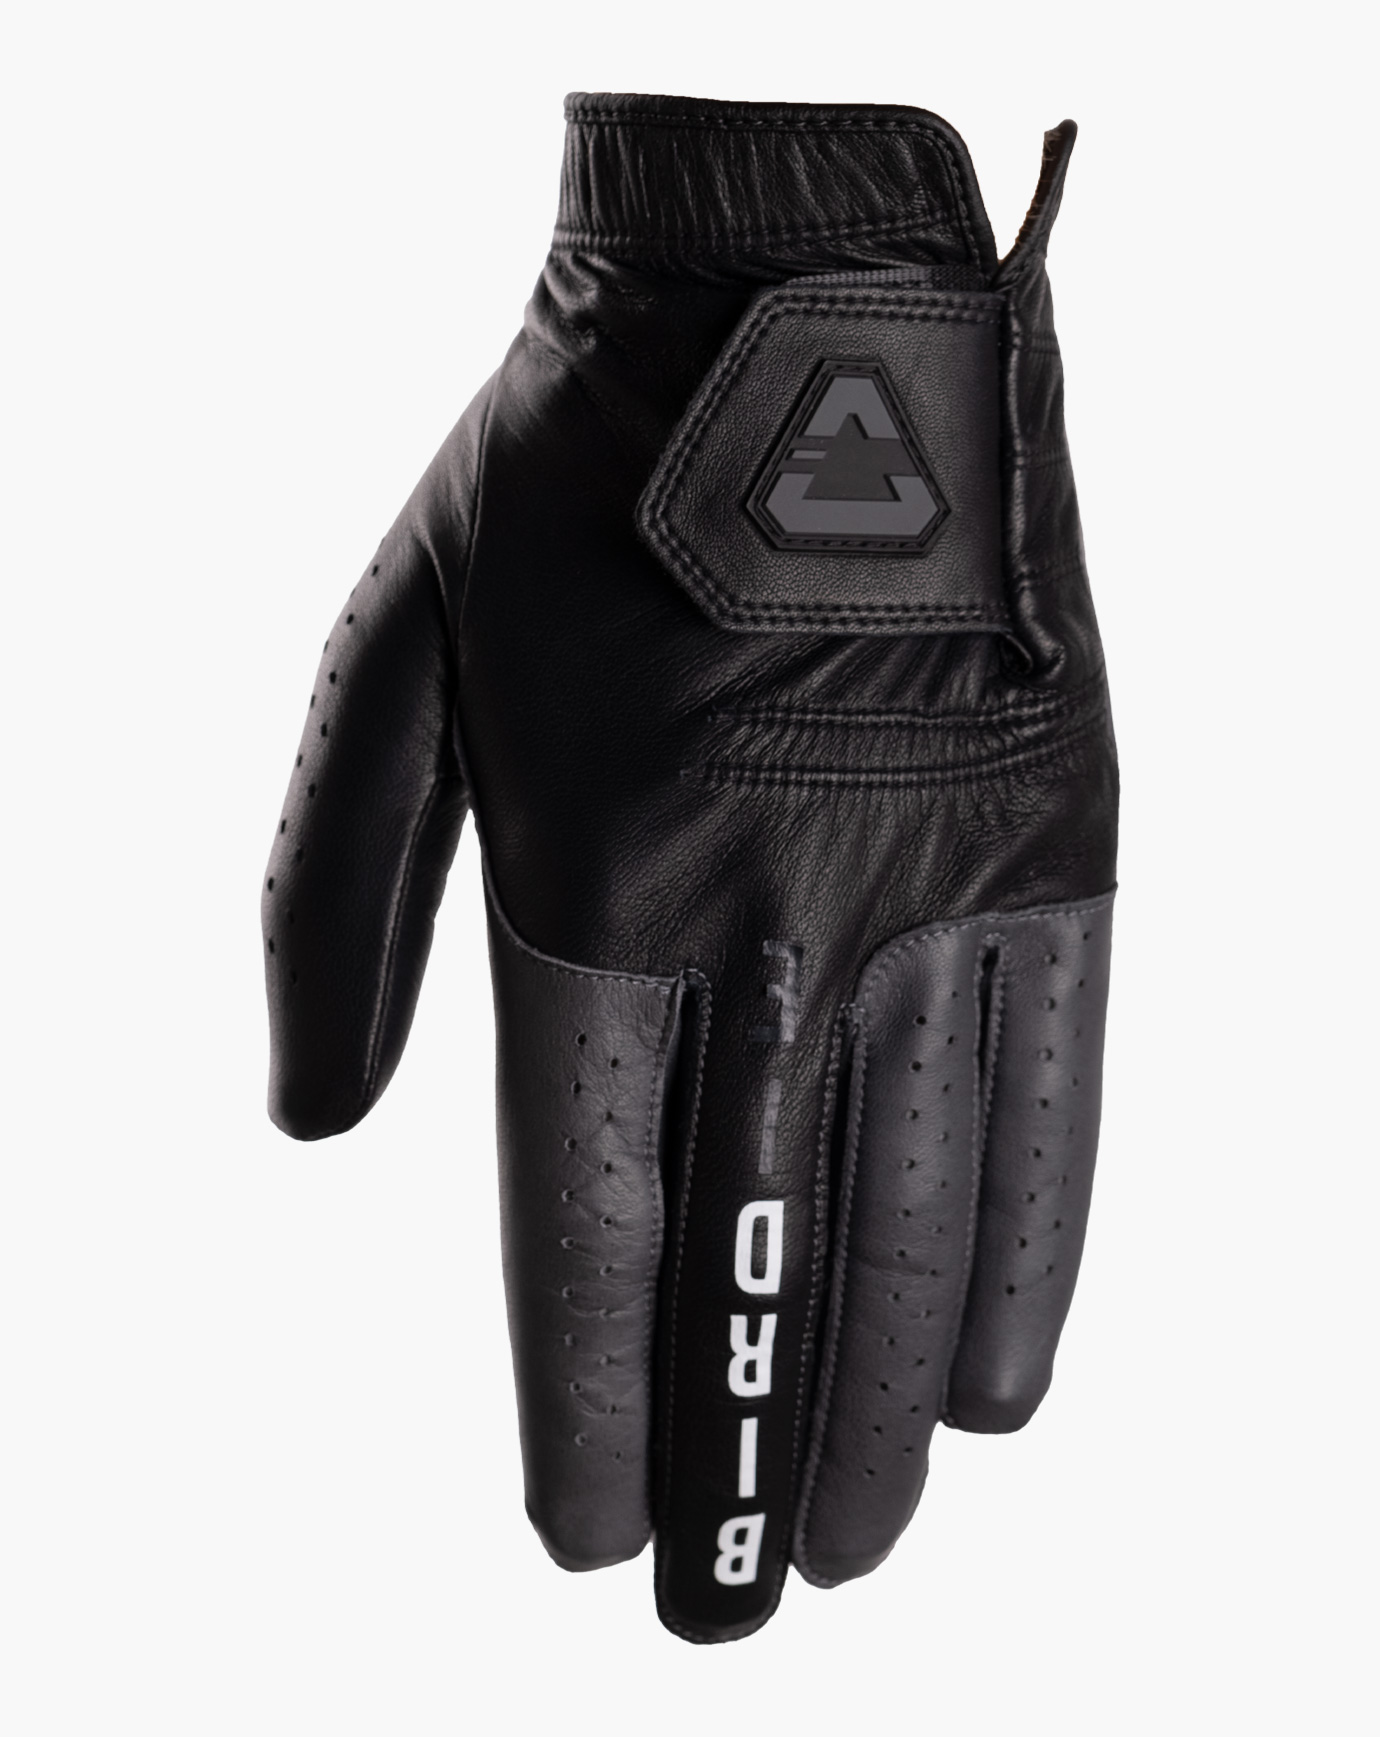 Custom Promotional Superior Grip Work Gloves